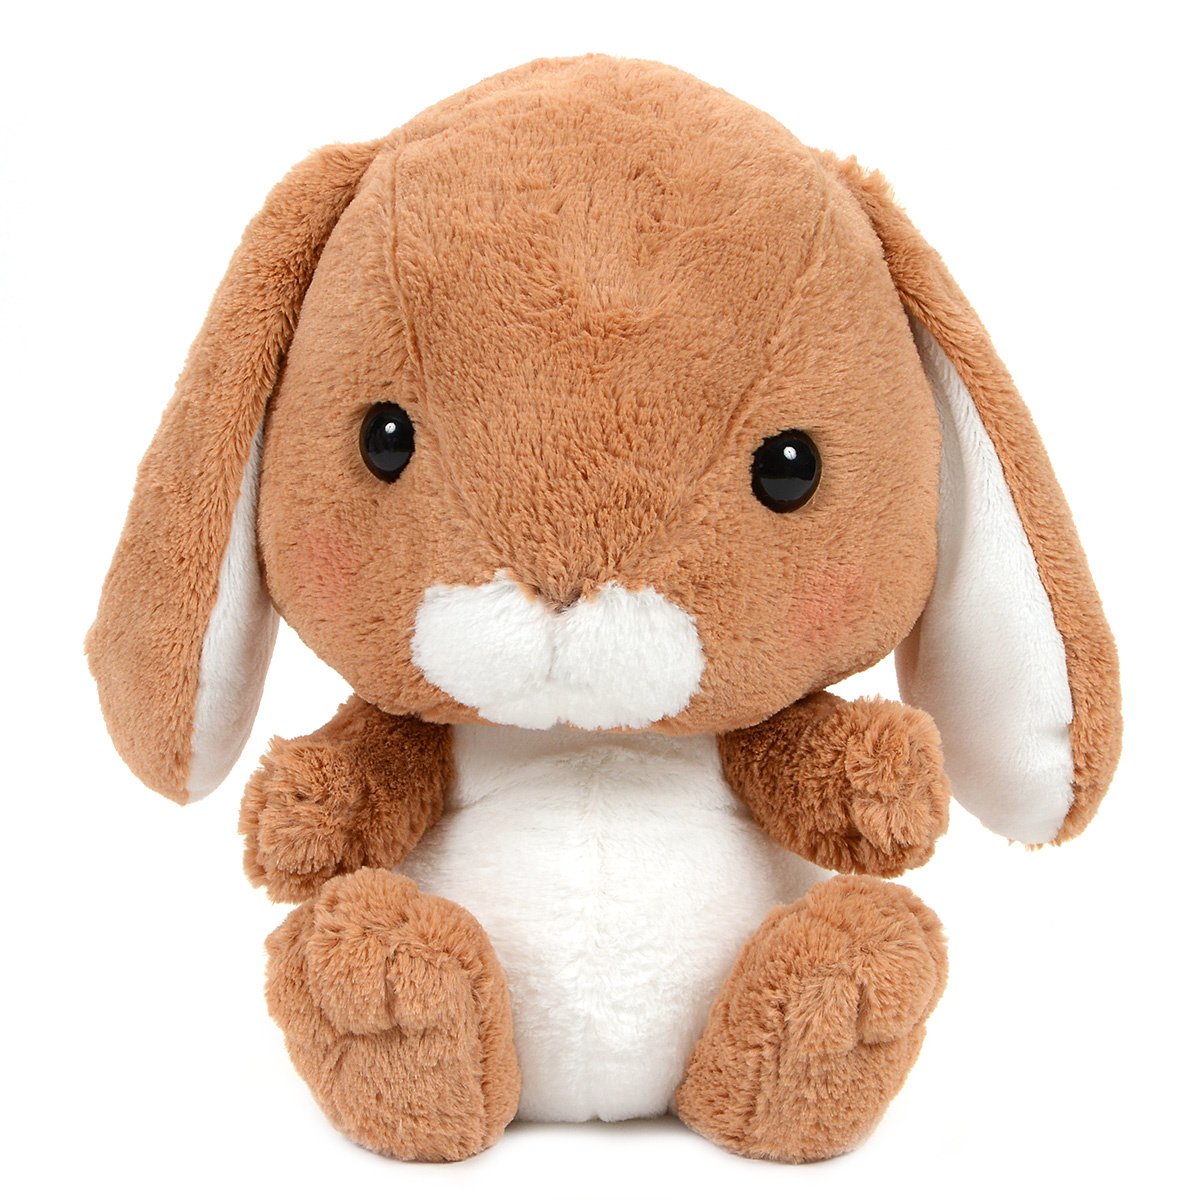 Amuse Bunny Plushie Cute Stuffed Animal Toy Brown Big Size